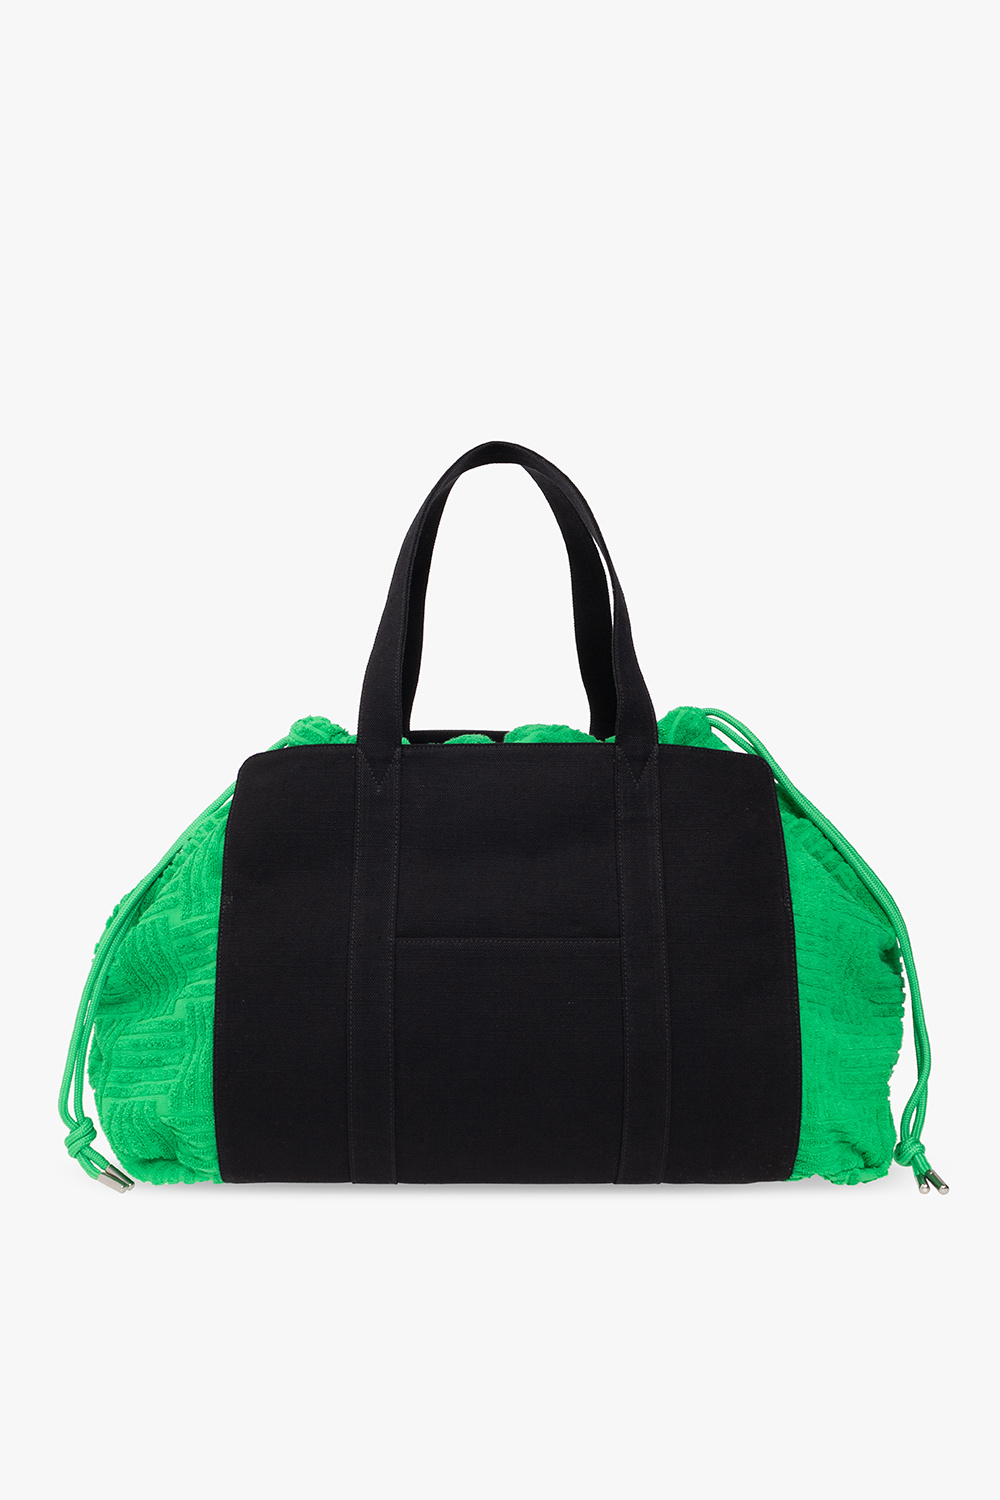 Bottega Veneta ‘Roll Up’ shopper bag